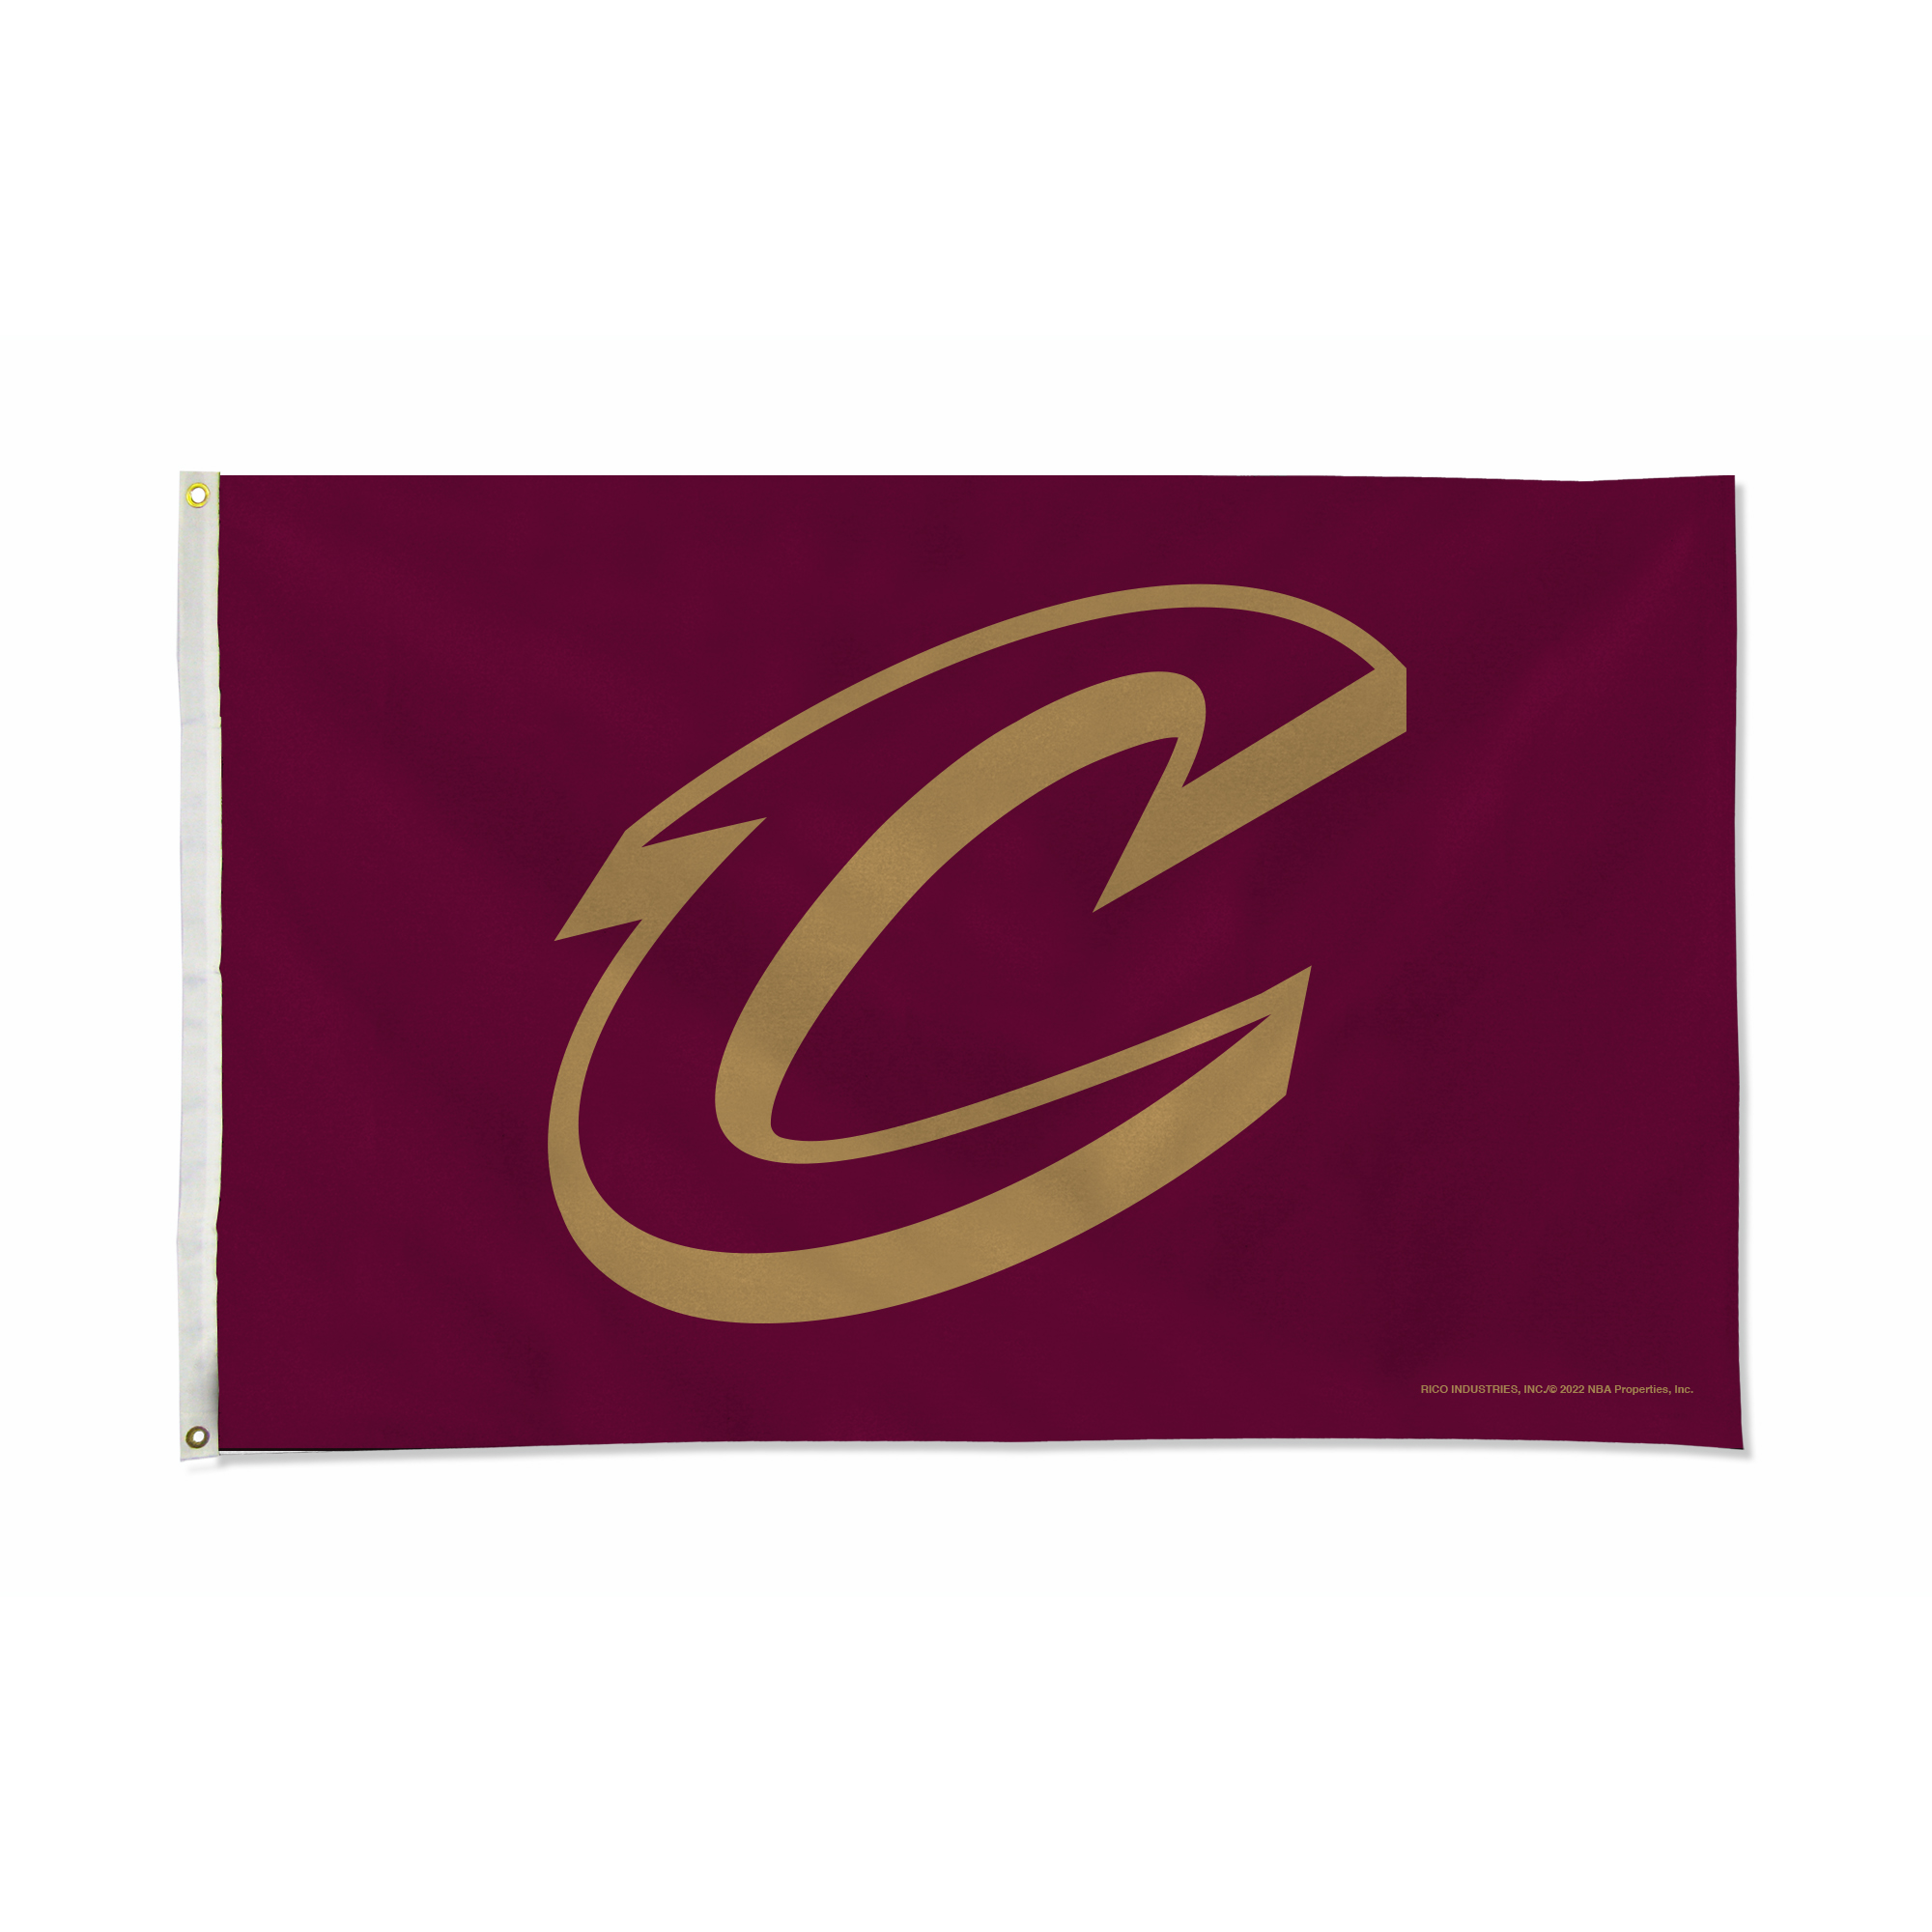 Rico NBA Rico Industries Cleveland Cavaliers Standard 3' x 5' Banner Flag